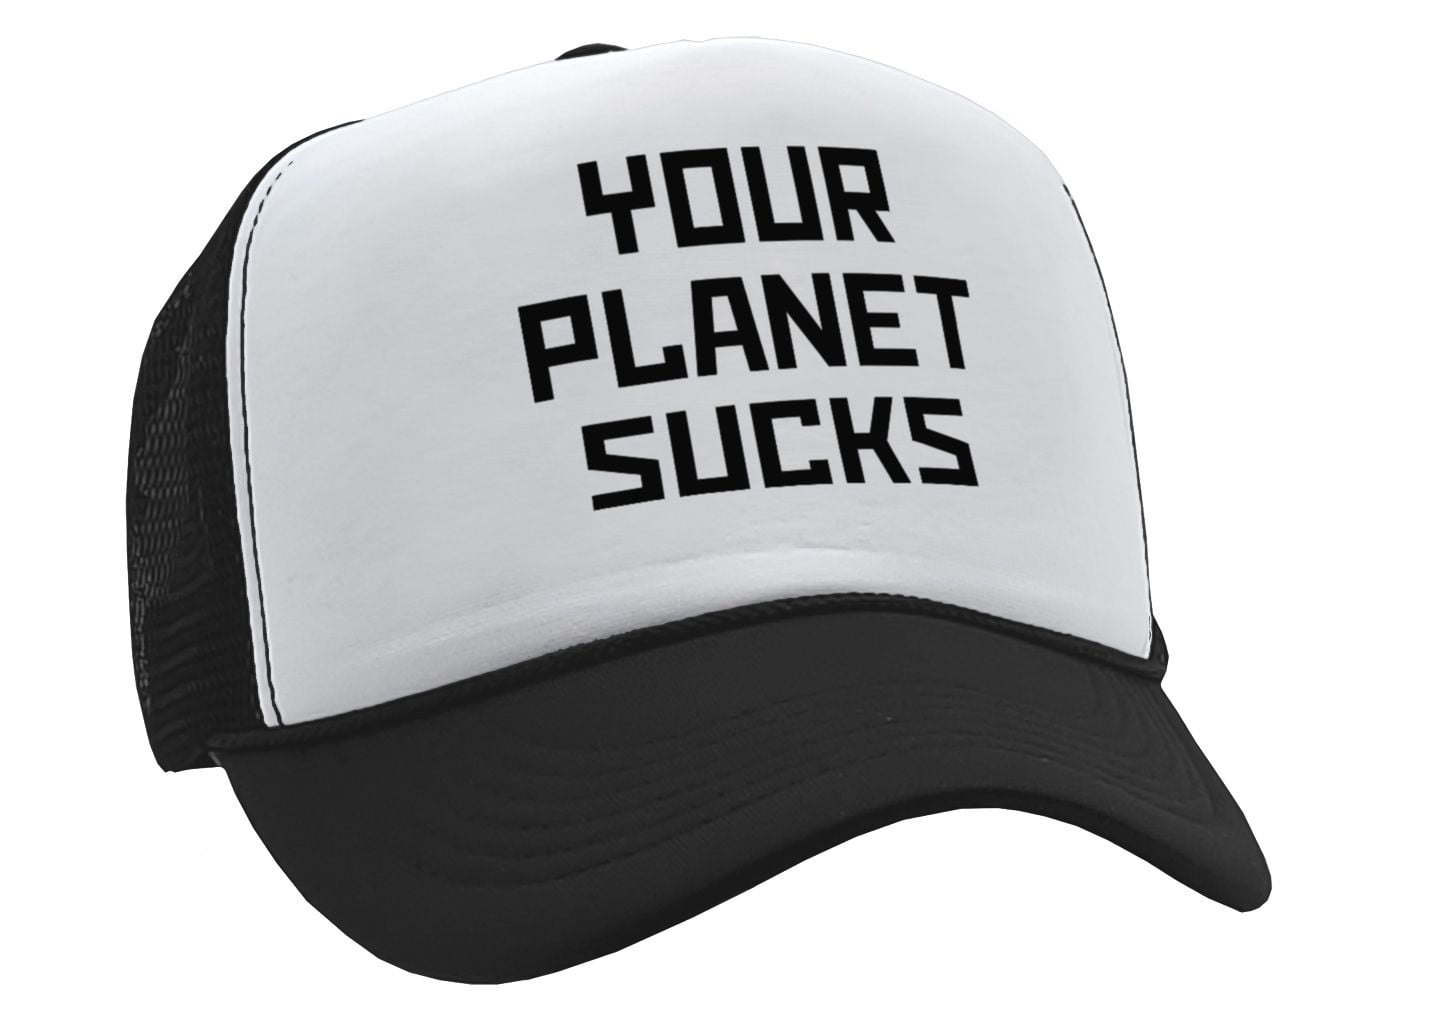 Your Planet Sucks Funny Alien Invasion Prank Vintage Retro Style Trucker Cap Hat Black